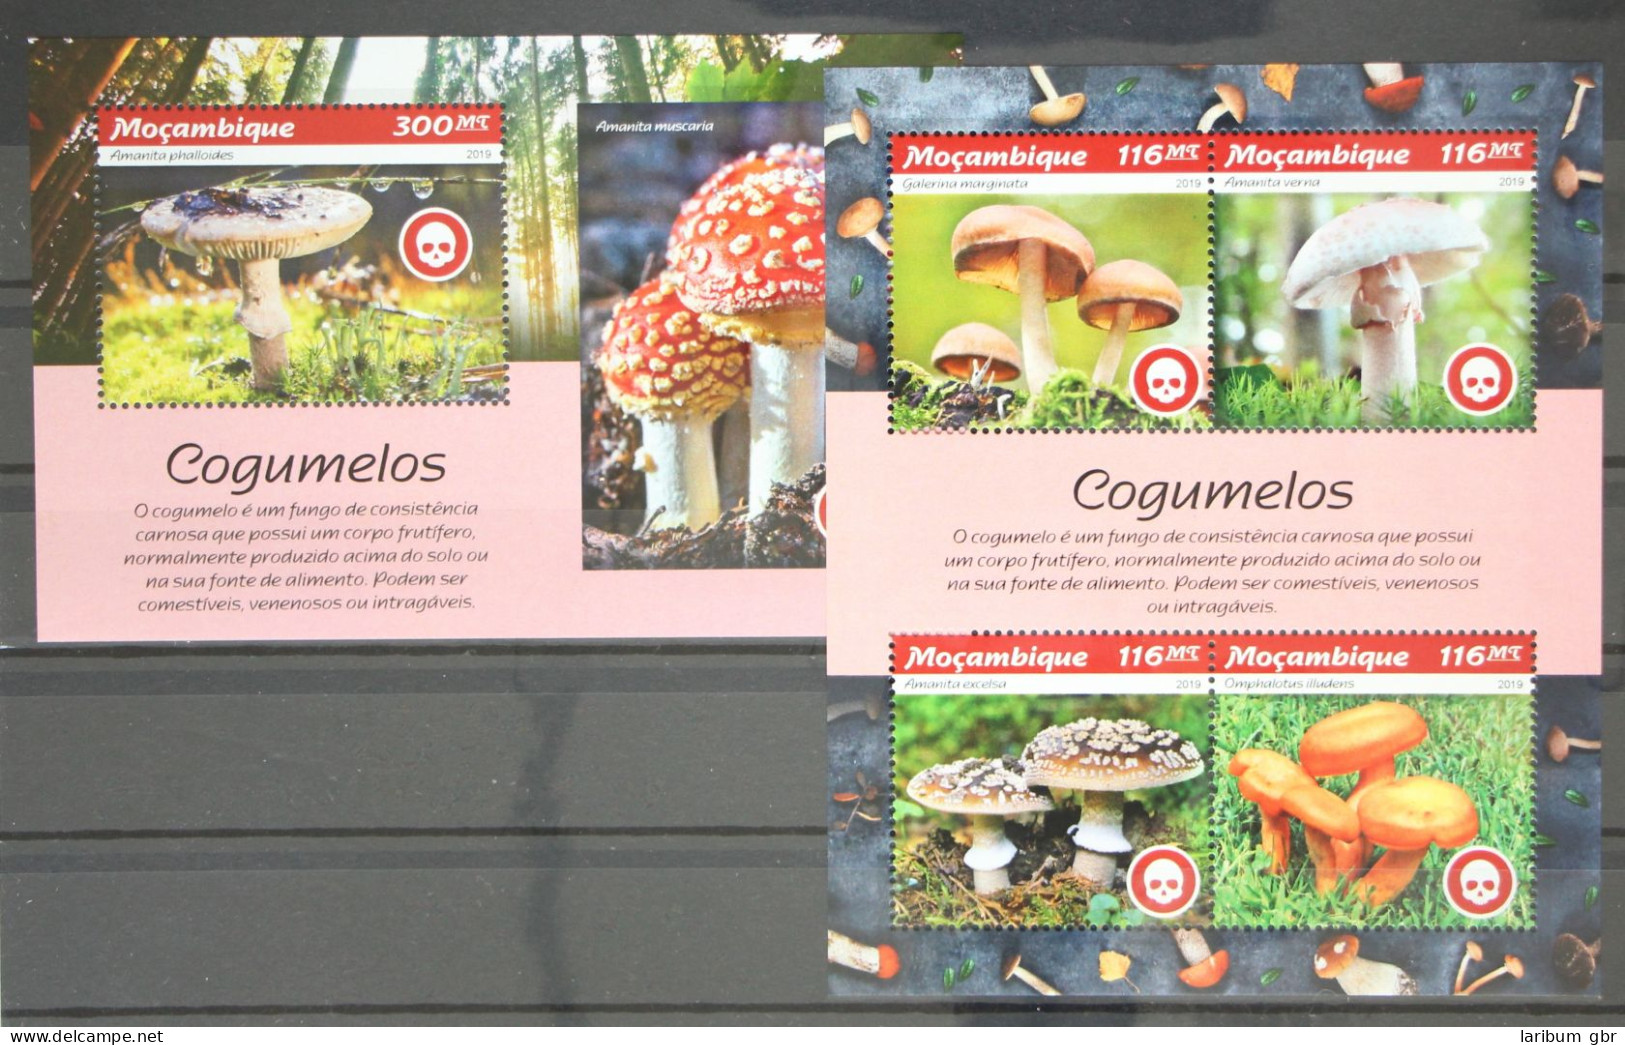 Mosambik Aus Jahrgang 2019 Postfrisch Kleinbogen Und Block / Pilze #GG182 - Mosambik